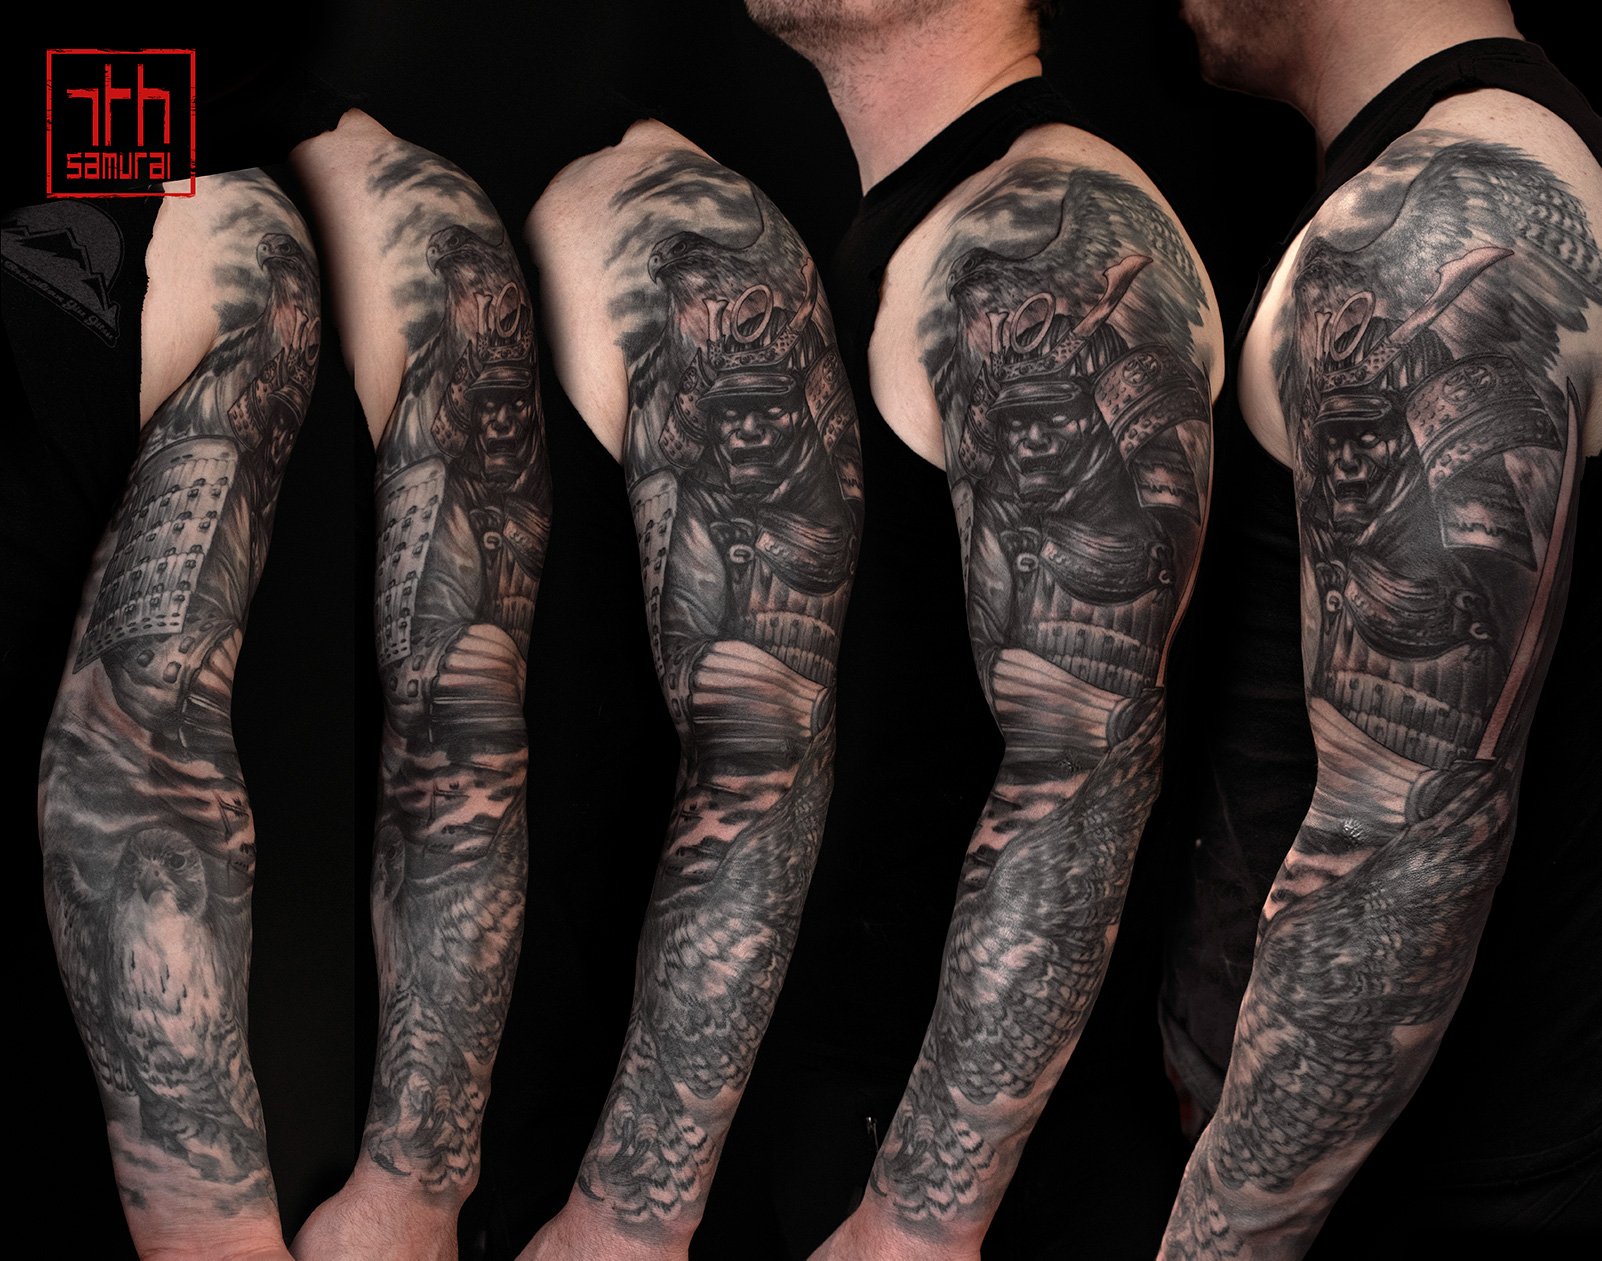 samurai  birds of prey falcon  hawk  Men's japanese realism tattoo sleeve  asian Tattoo artist: Kai at 7th Samurai. YEG Edmonton, Alberta, Canada) best 2020 